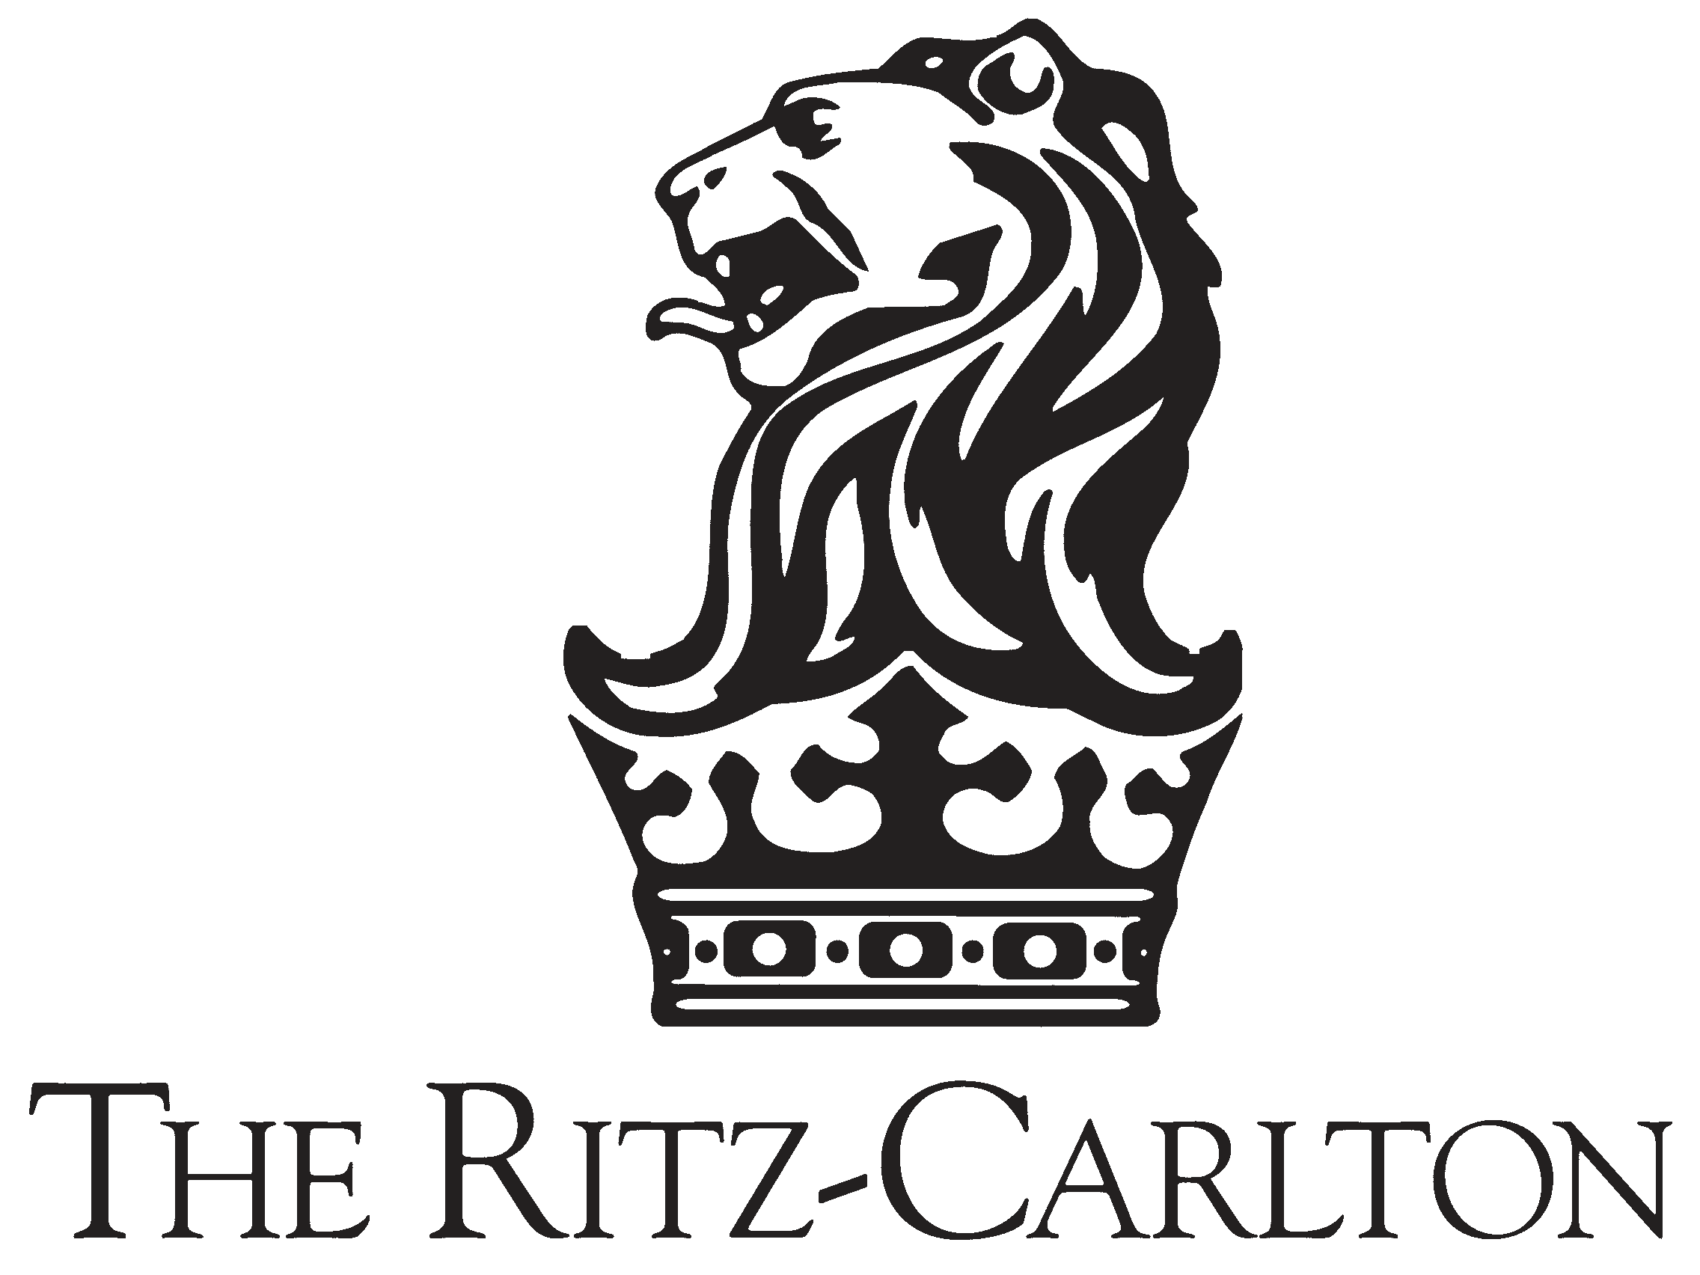 Ritz-Carlton-logo-and-wordmark-e1528697975401.png